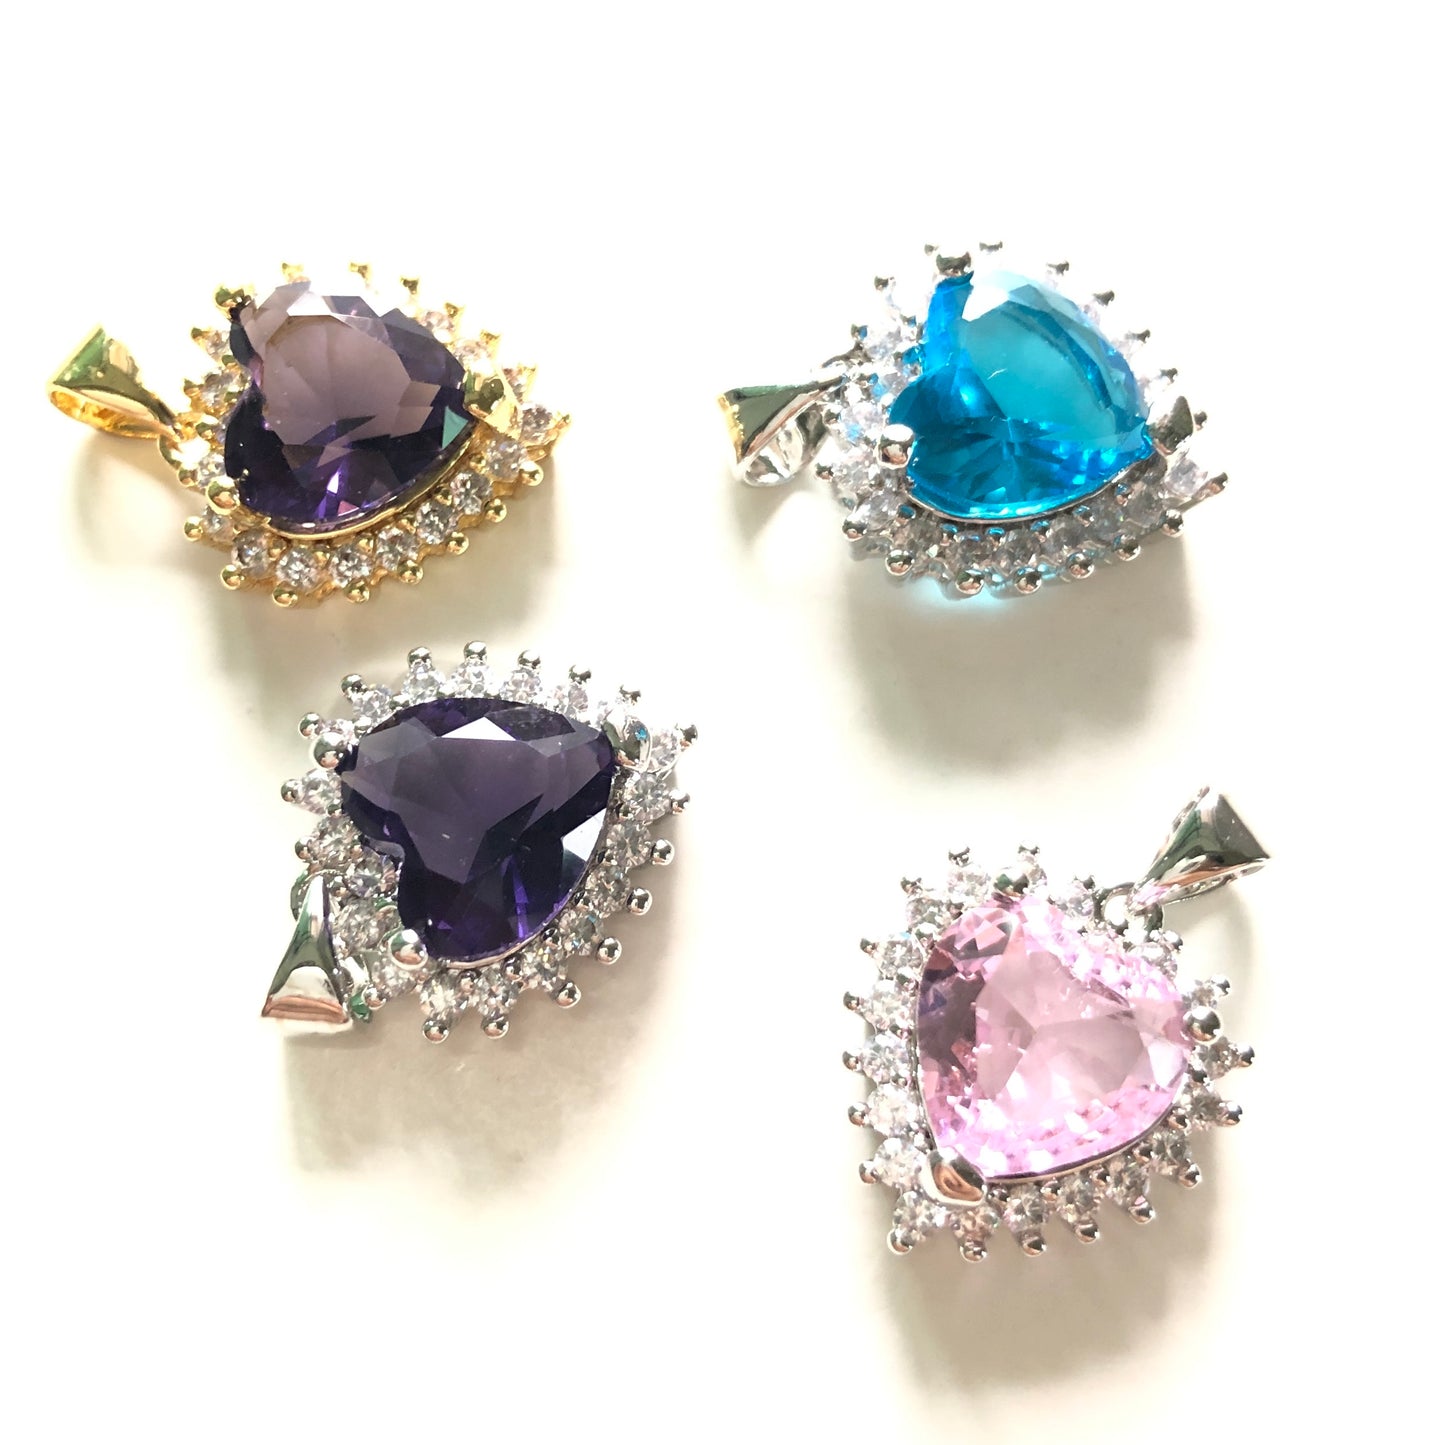 10pcs/lot 18*16mm Purple Pink Blue CZ Paved Heart Charms CZ Paved Charms Hearts Charms Beads Beyond